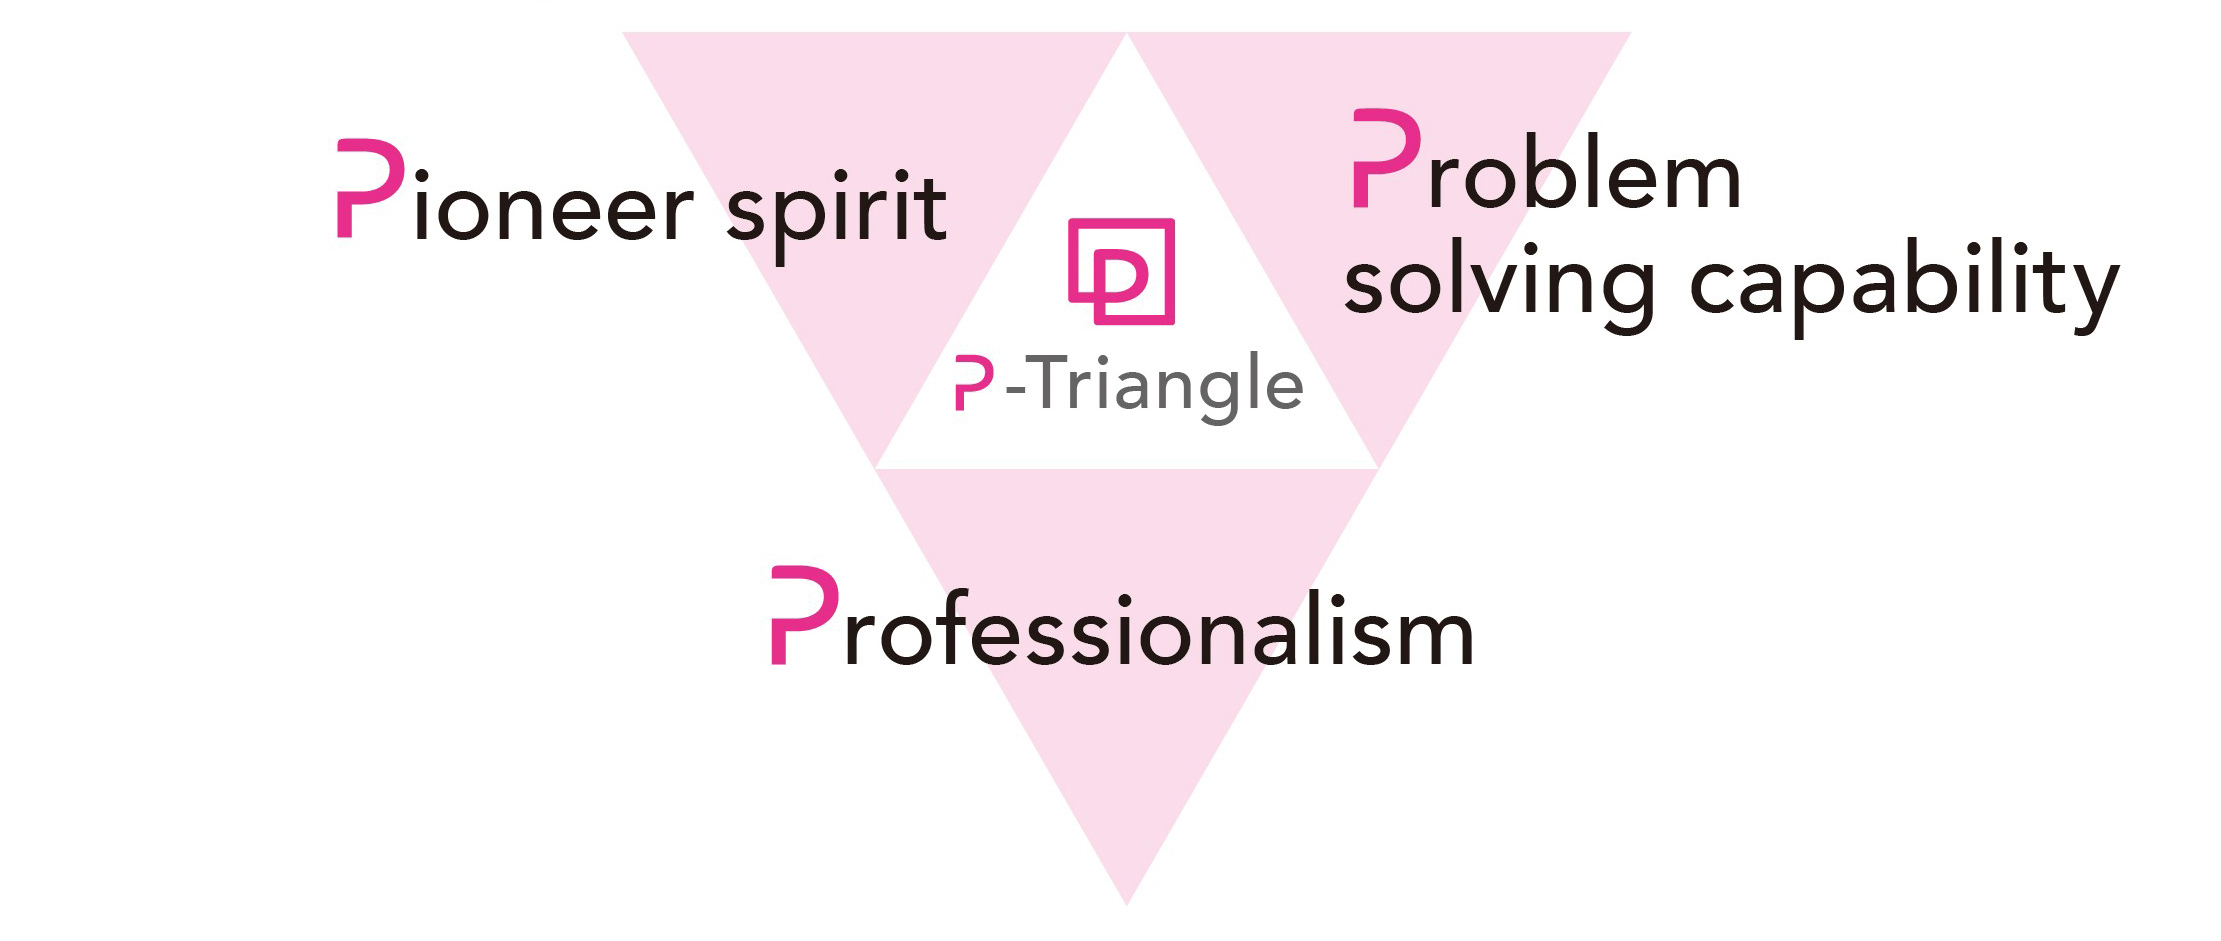 Pioneer spirit Problem solving capability Professionalism